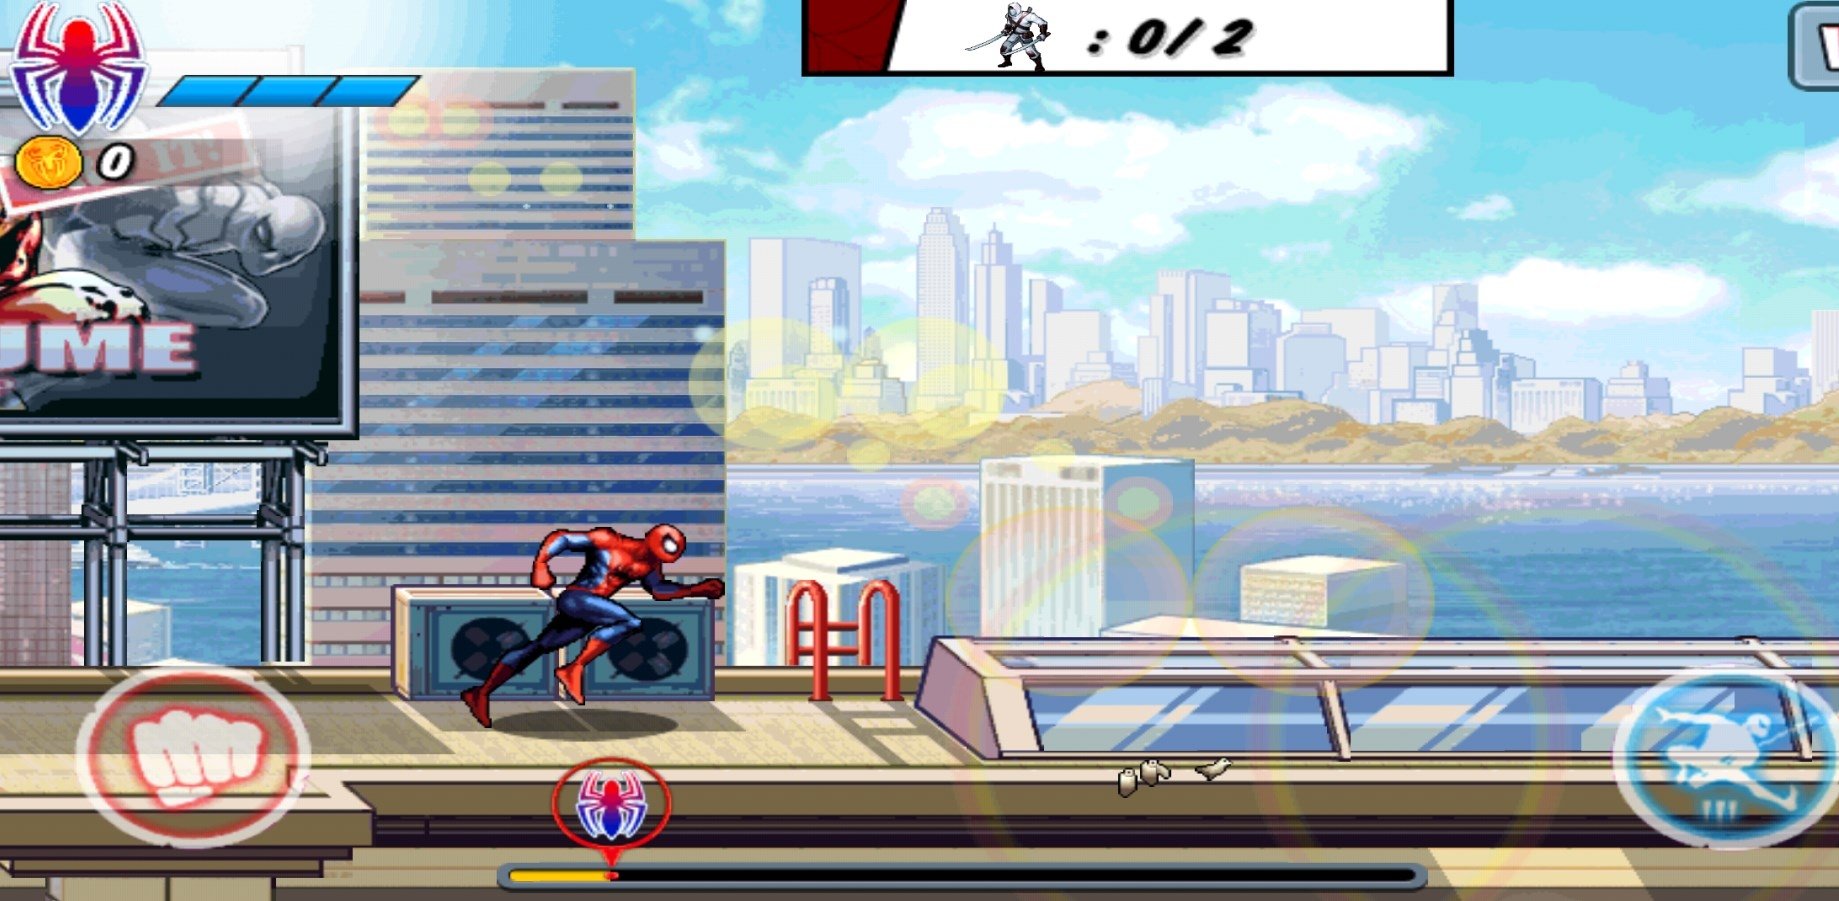 spiderman ultimate power apk